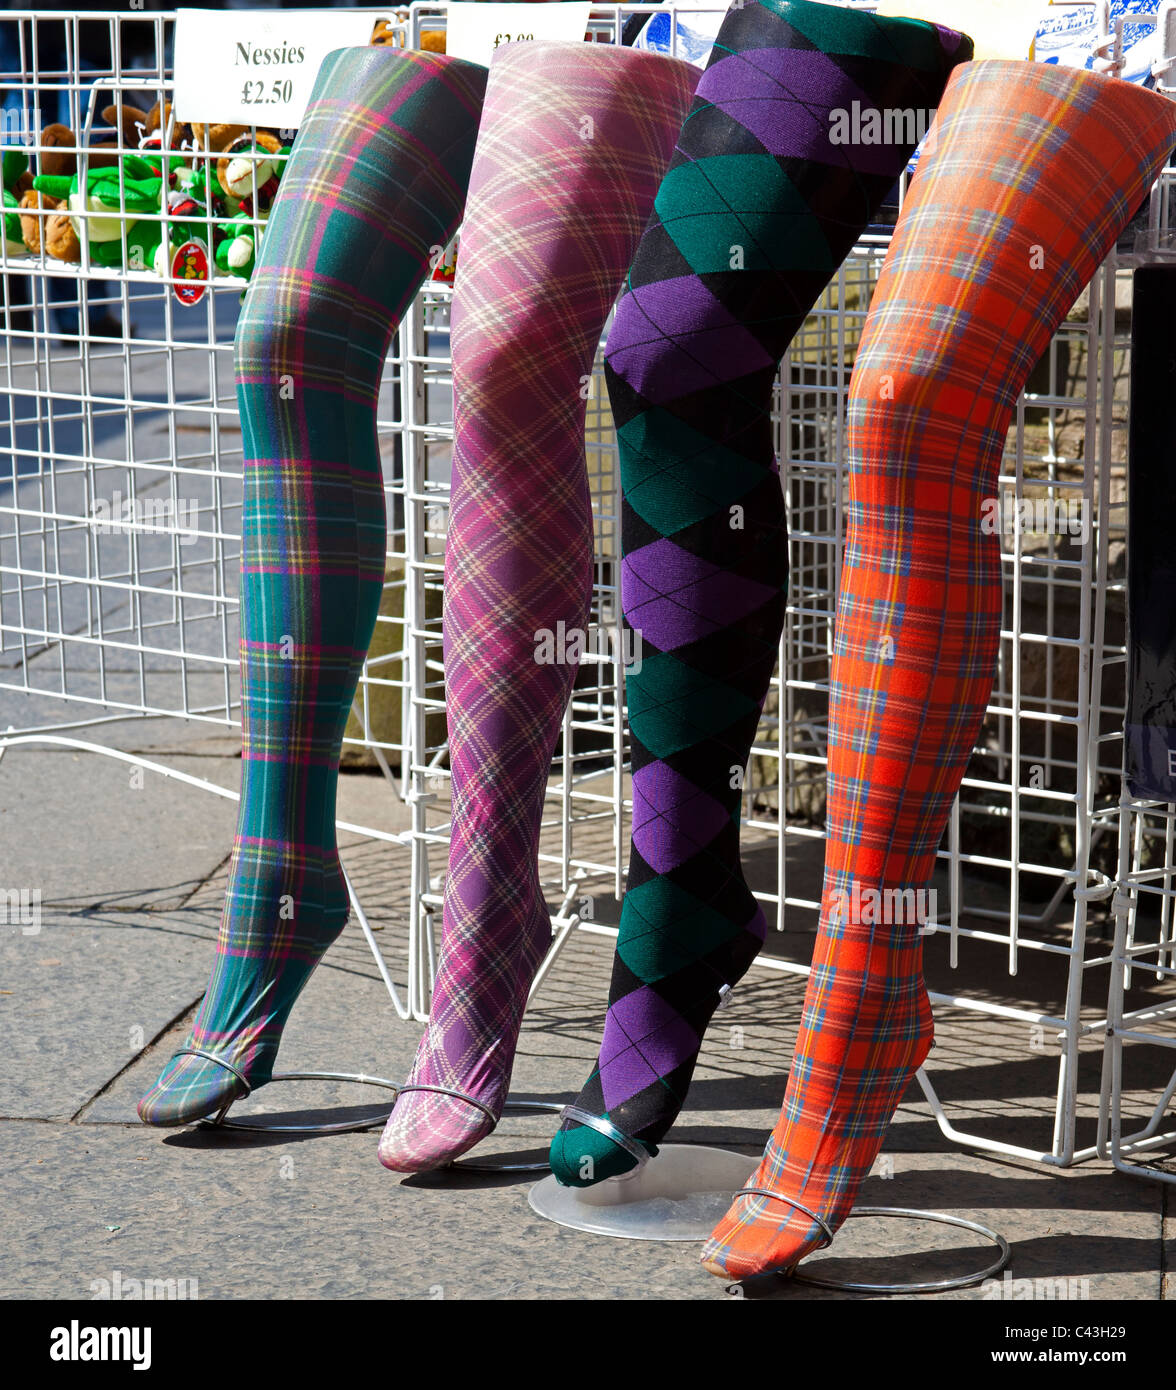 https://c8.alamy.com/comp/C43H29/edinburgh-tartan-stocking-legs-shop-display-C43H29.jpg